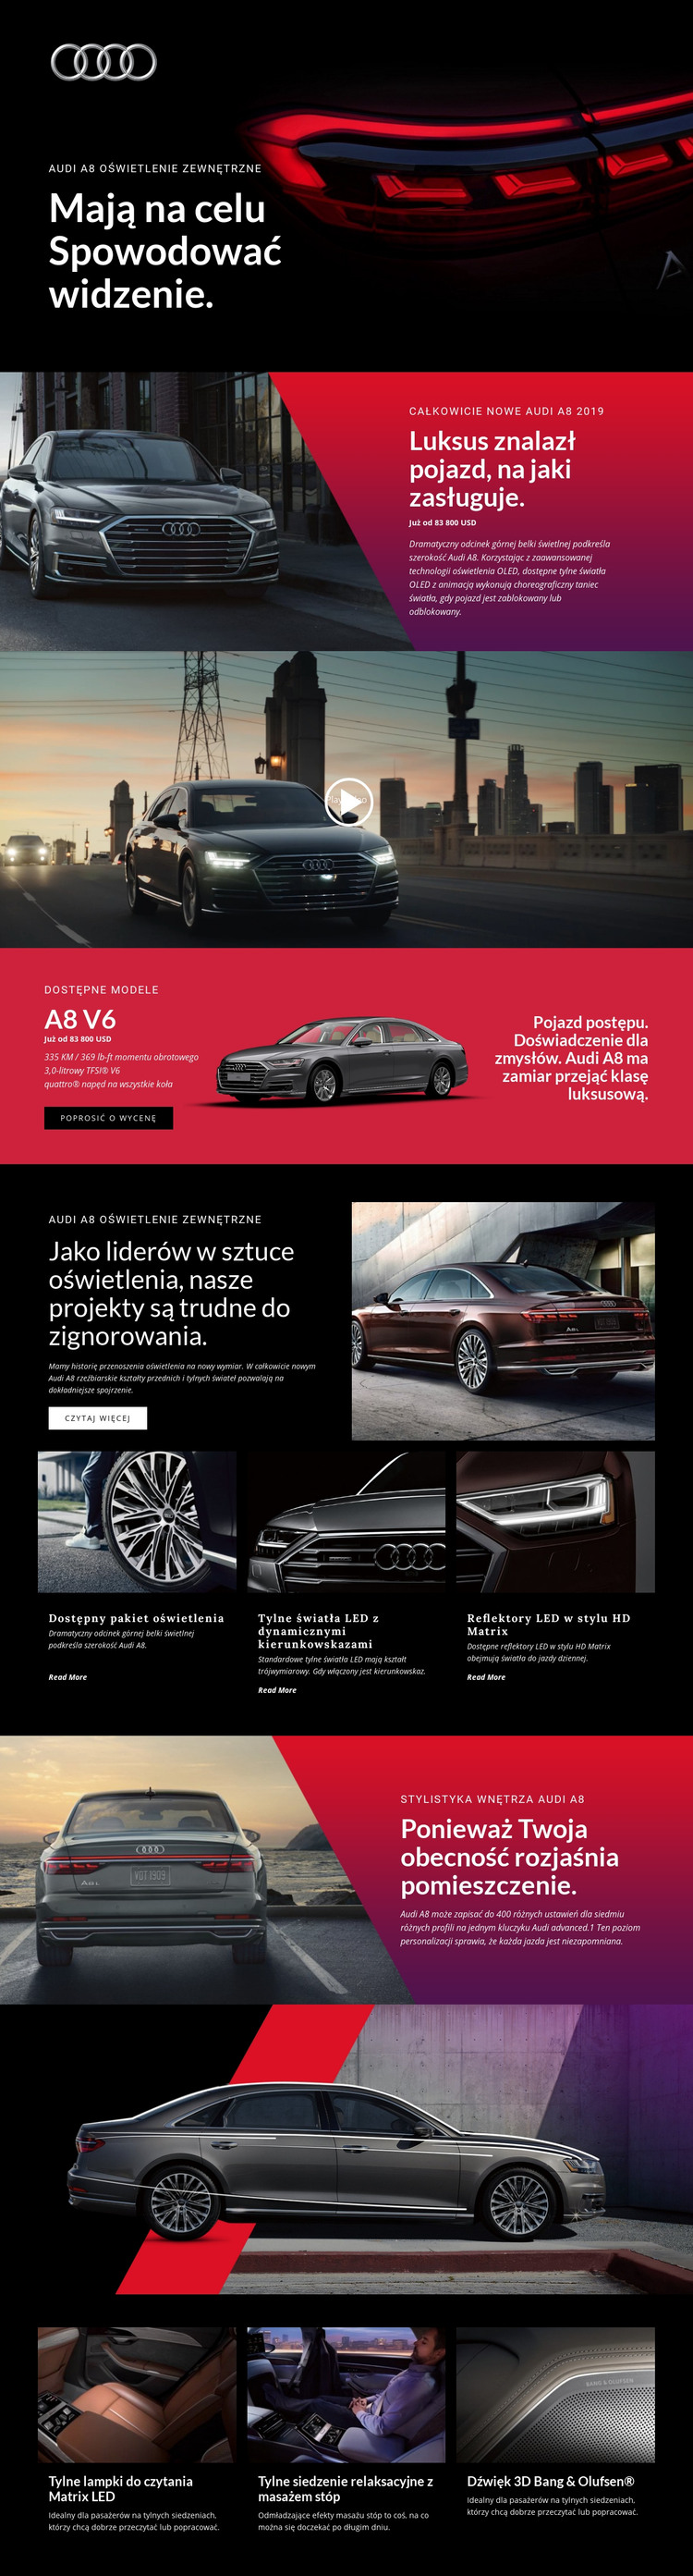 Luksusowe samochody Audi Szablon HTML